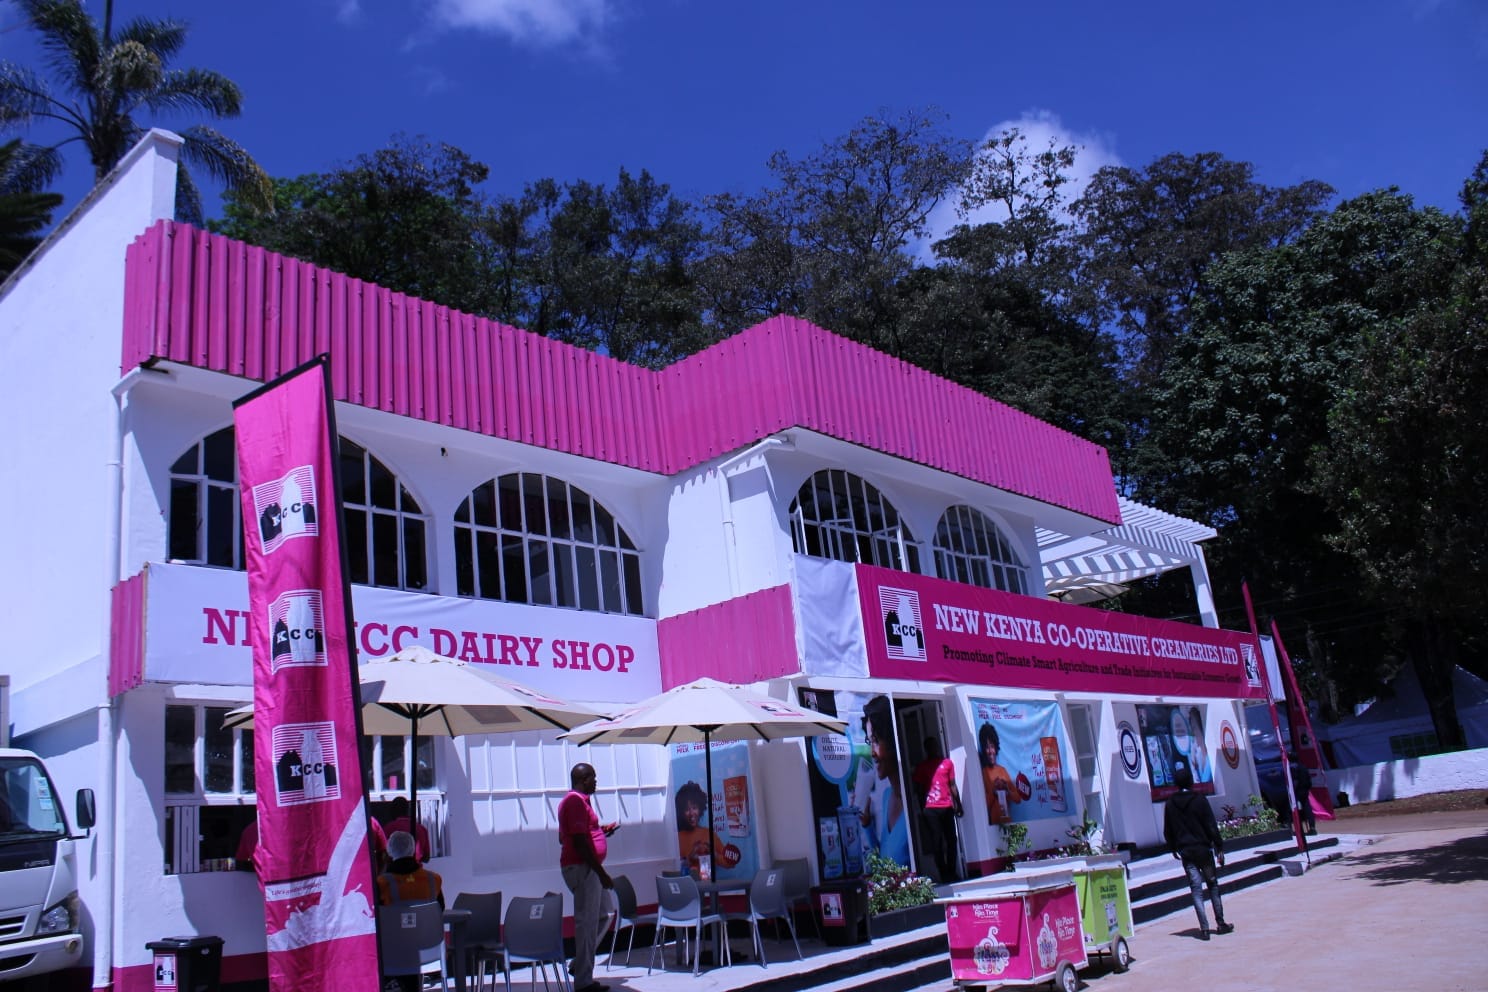 The New Kenya Co-operative Creameries